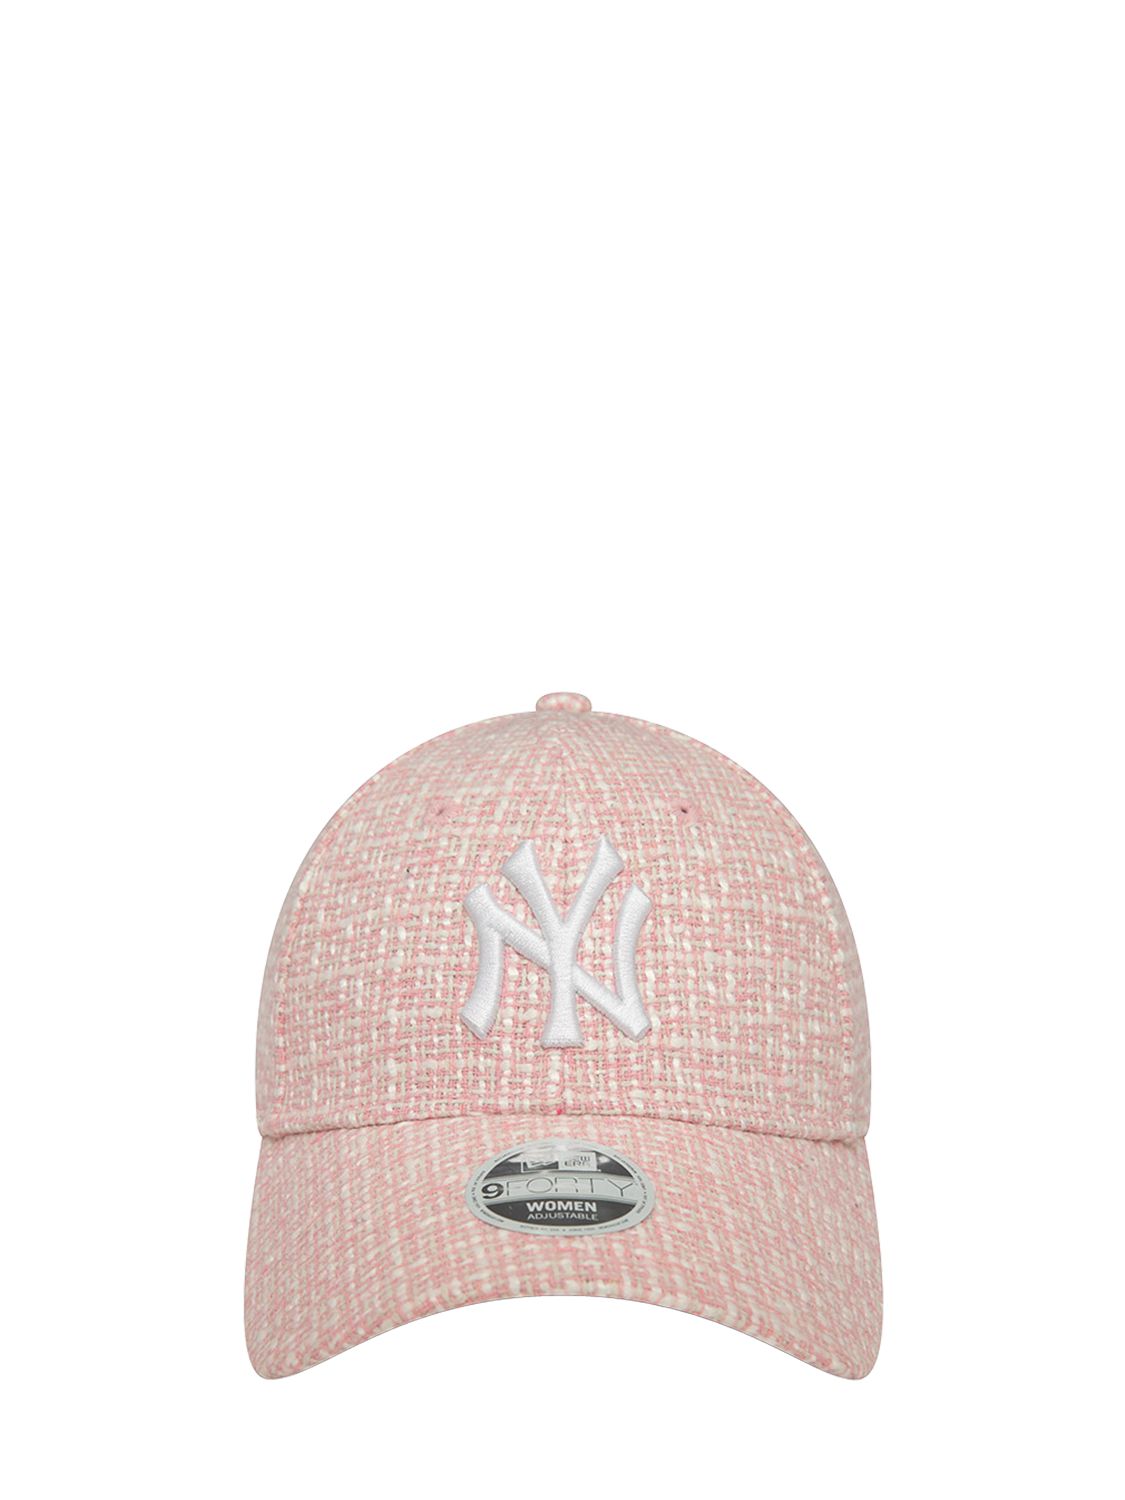 Ny Yankees Female Summer Tweed Hat